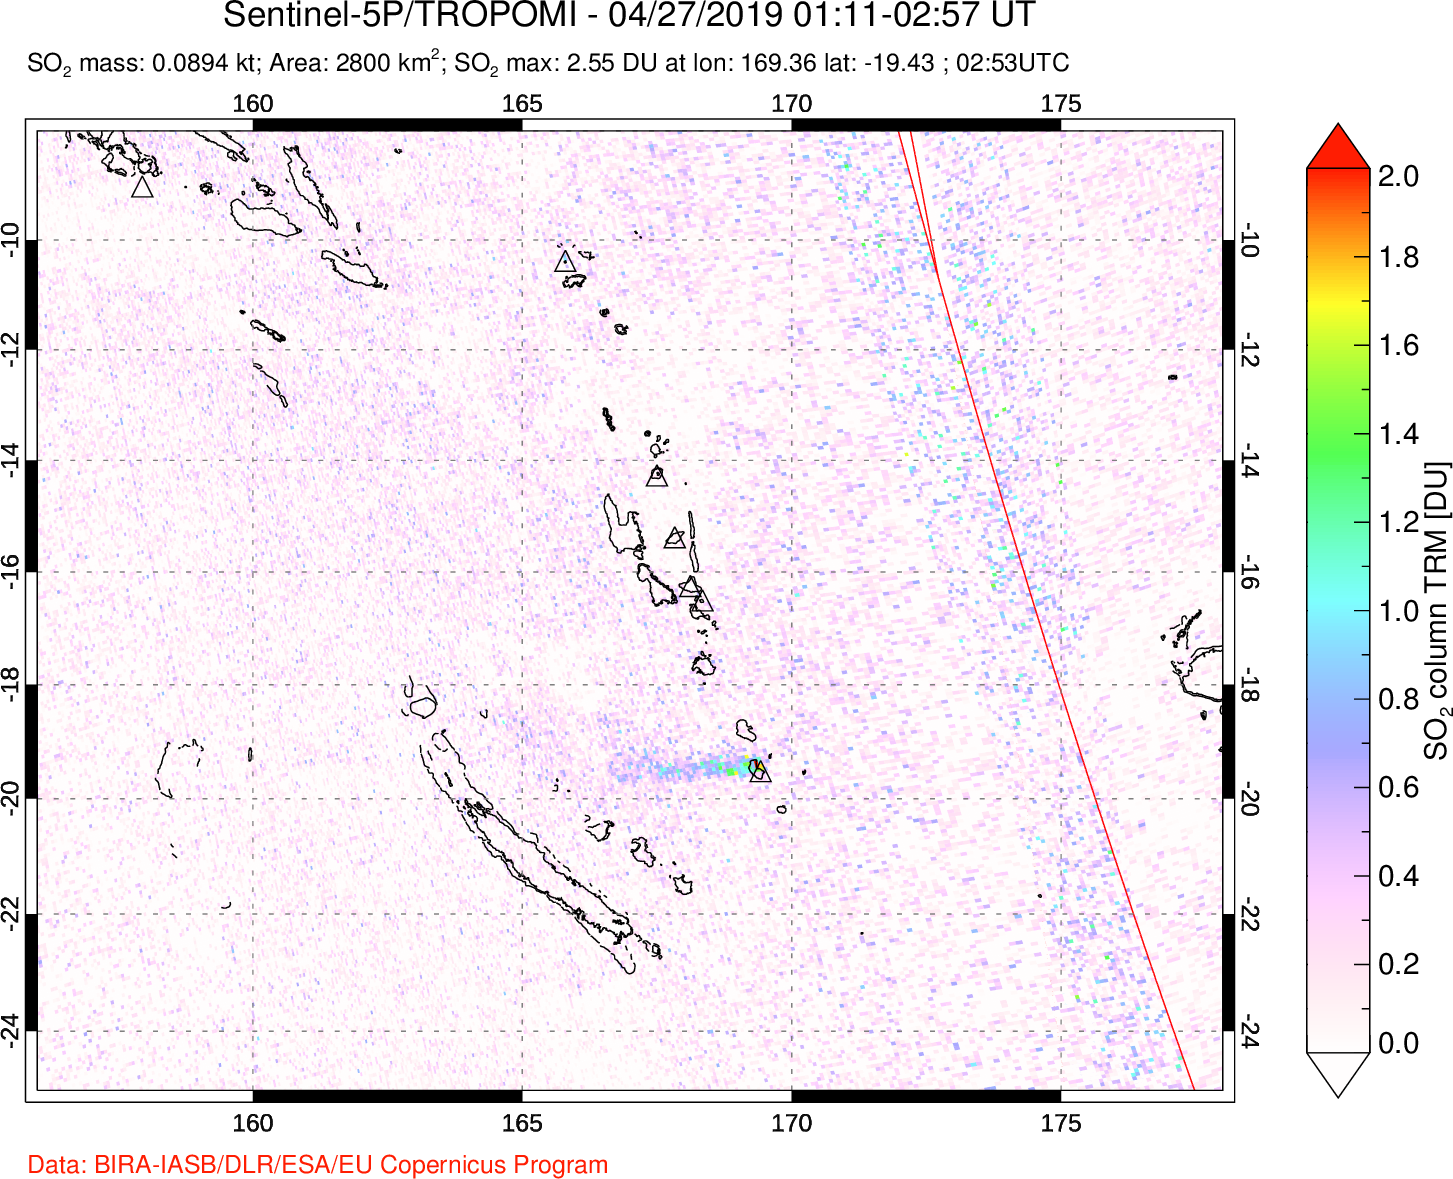 A sulfur dioxide image over Vanuatu, South Pacific on Apr 27, 2019.